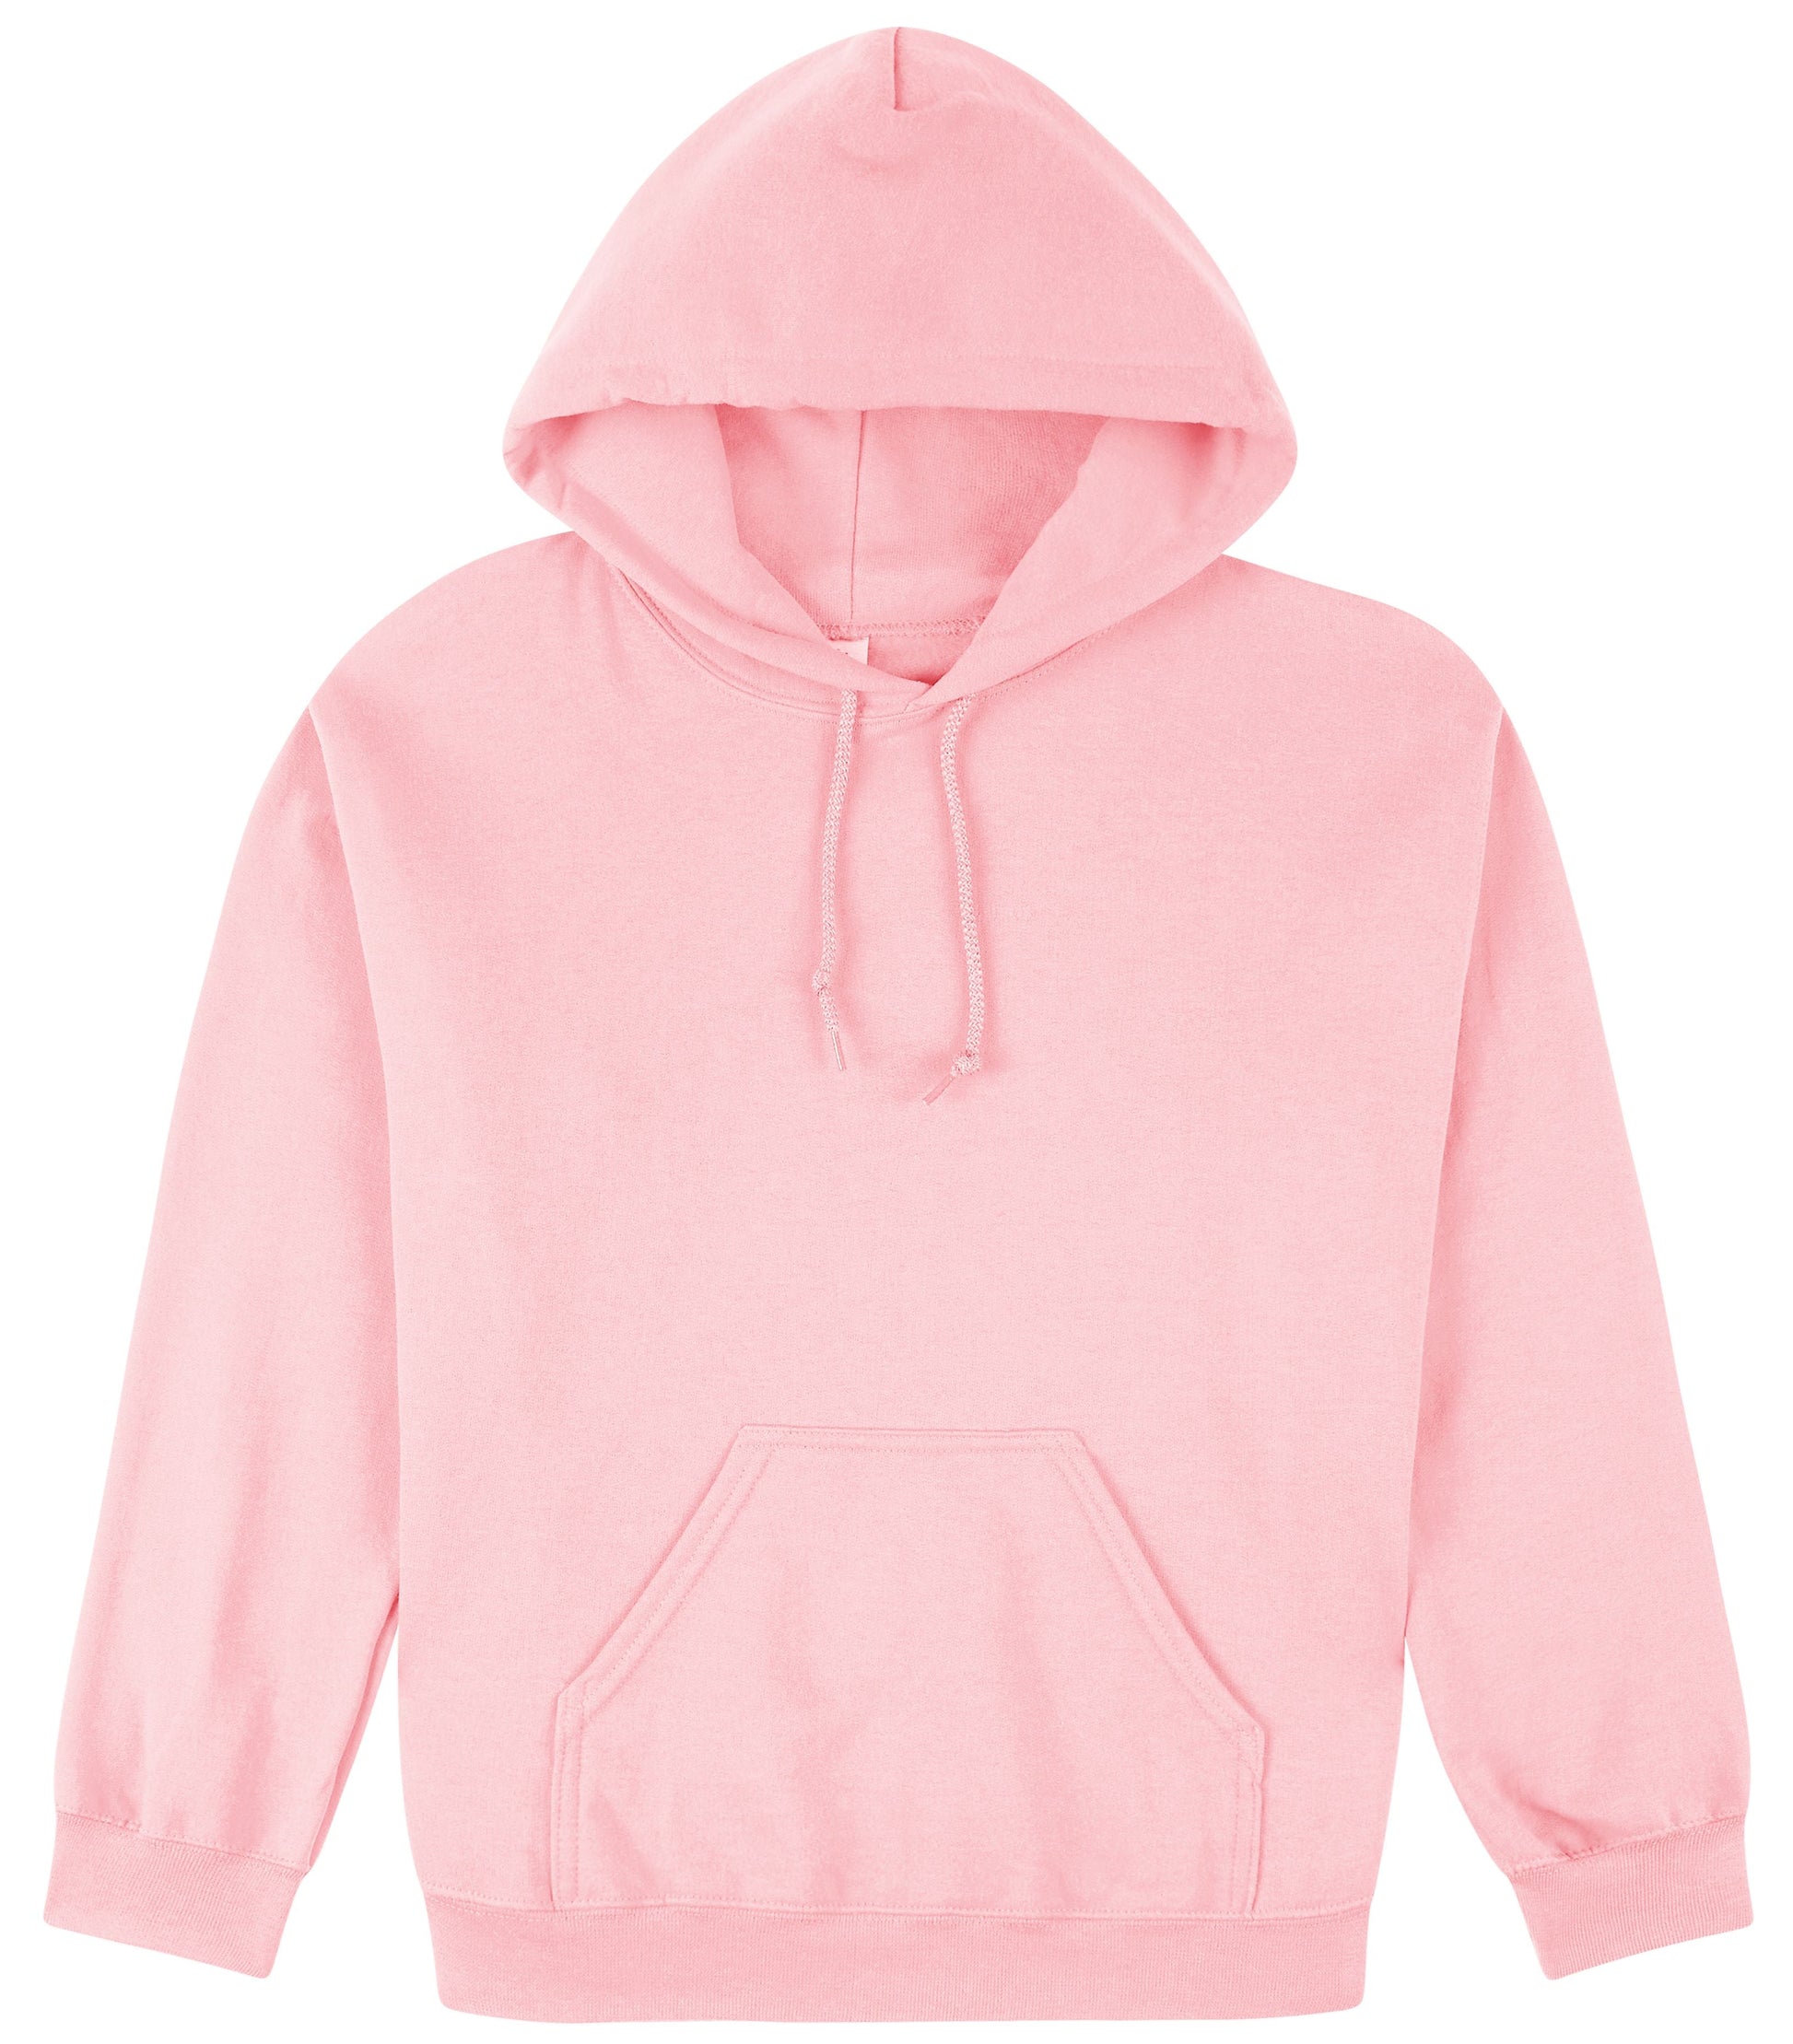 Light Pink Hoodie jumper sweater